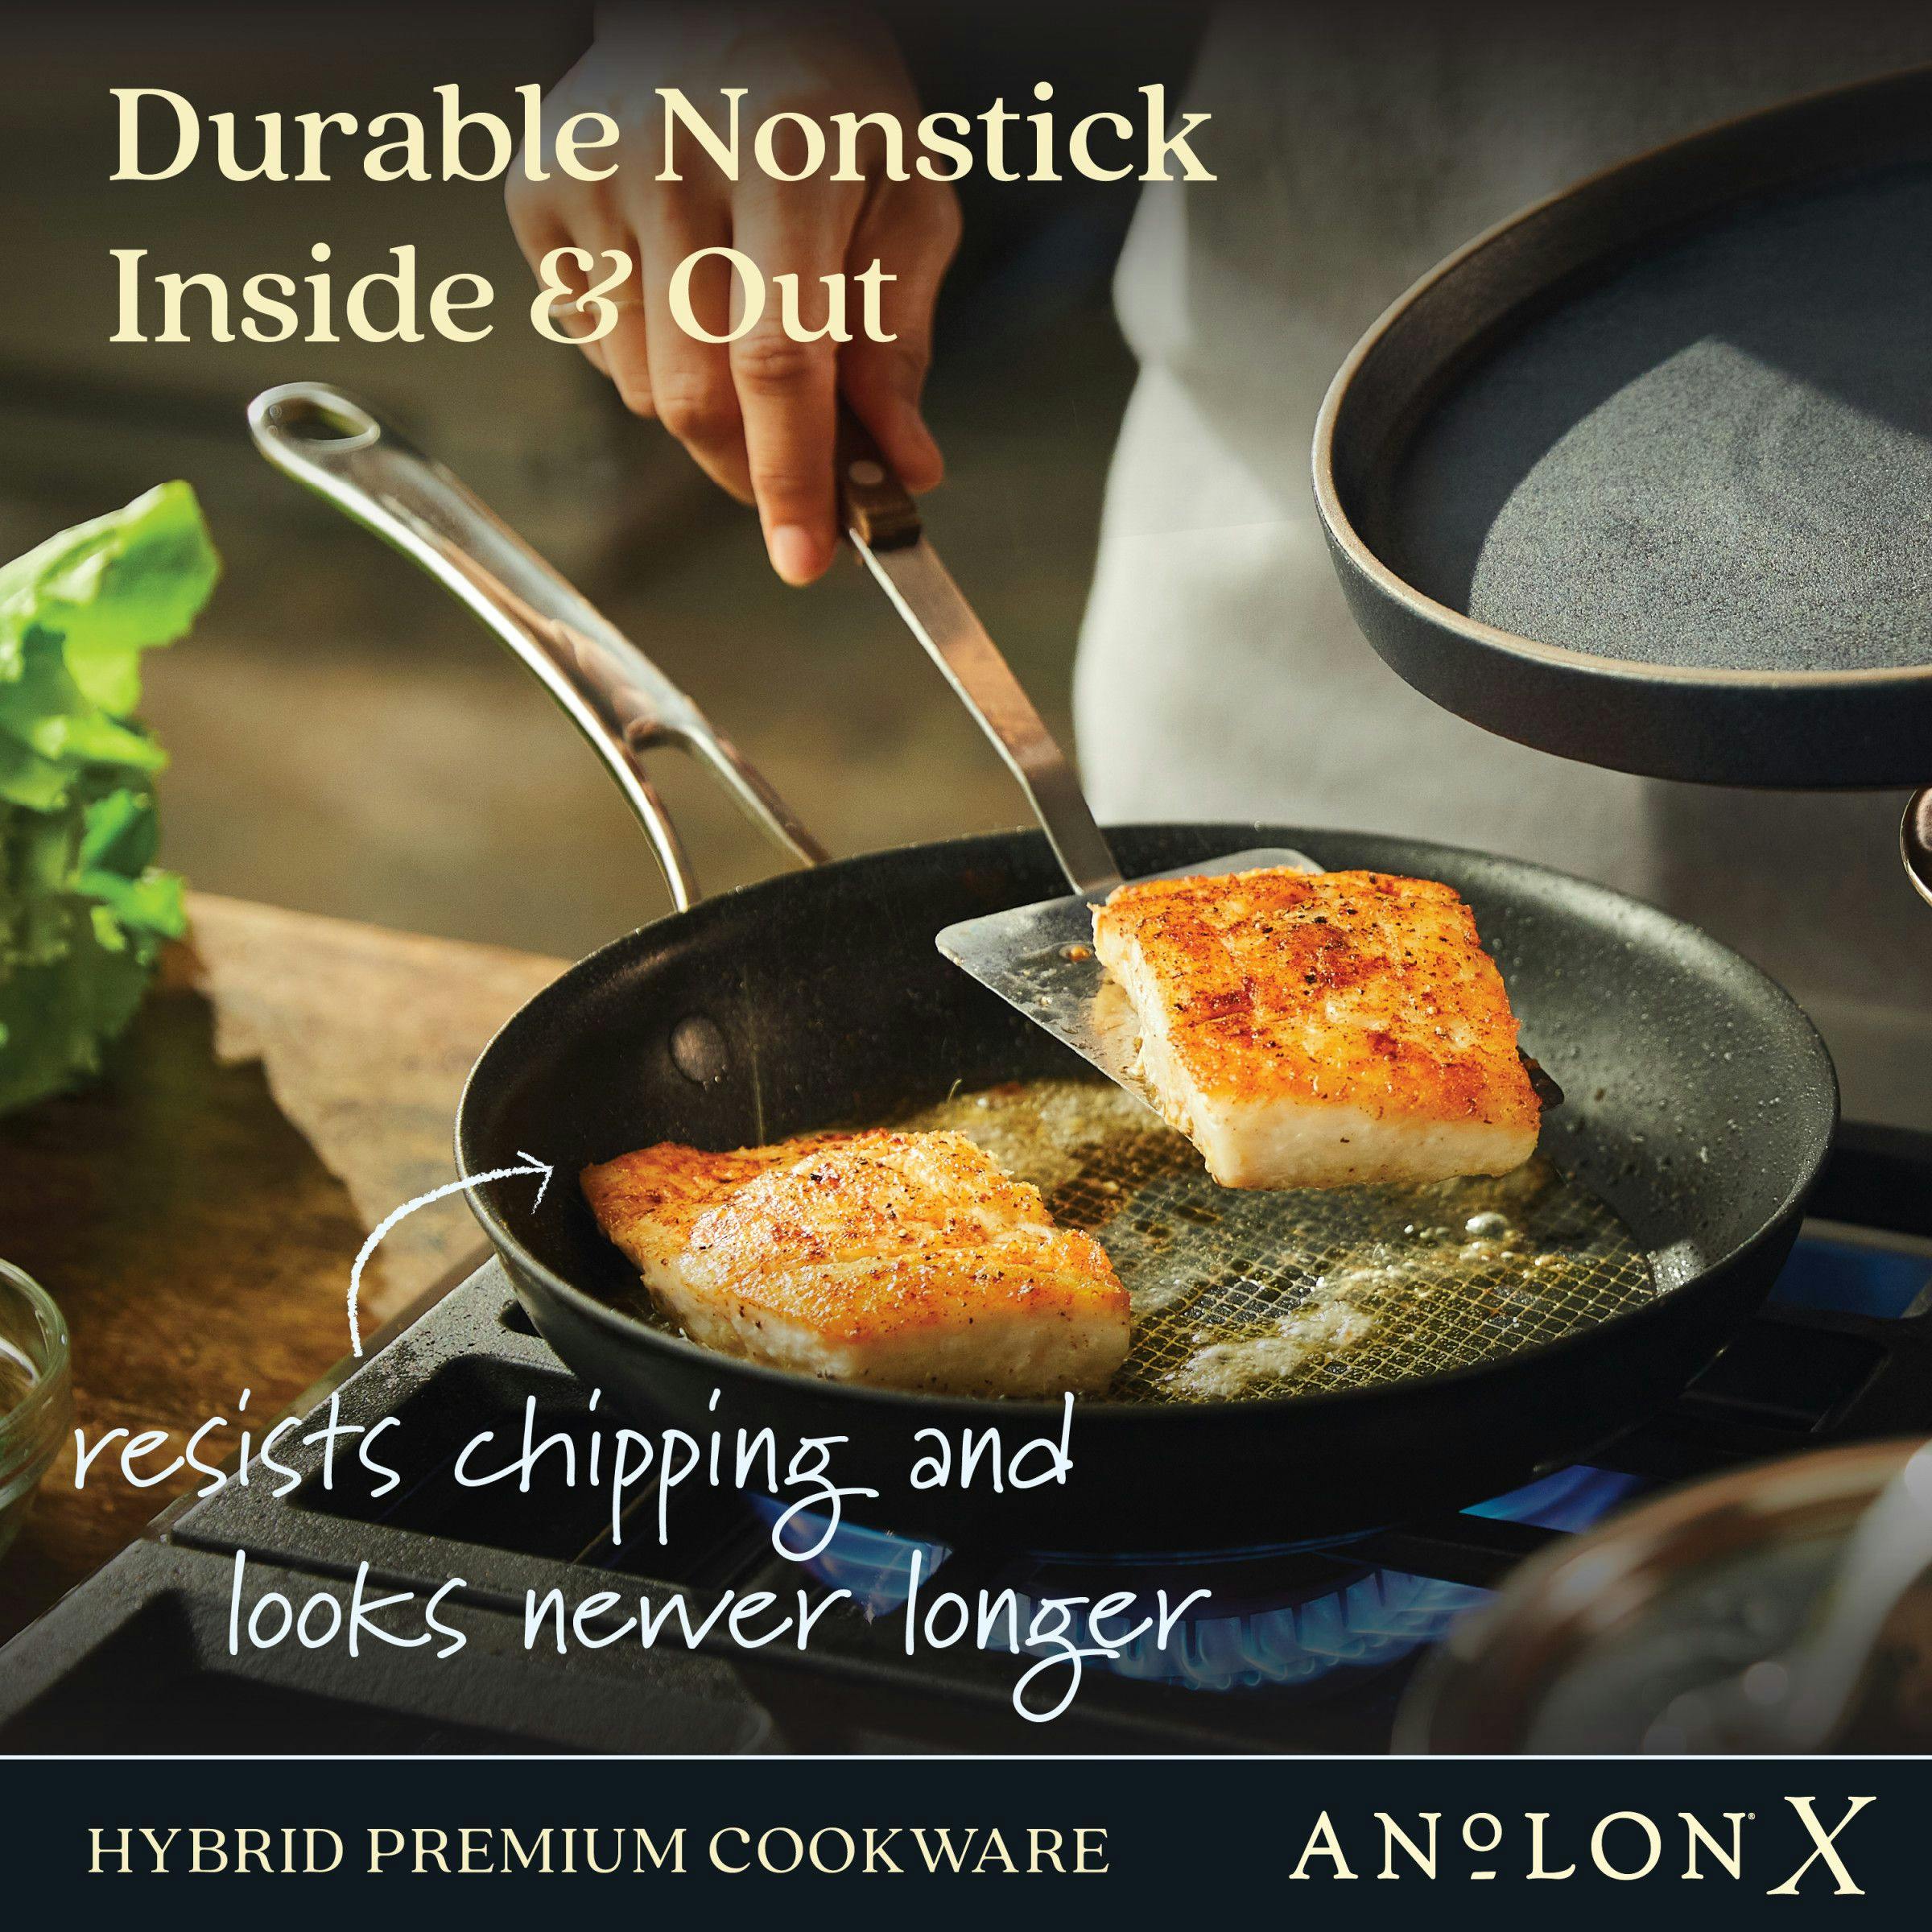 12 Nonstick Induction Frying Pan